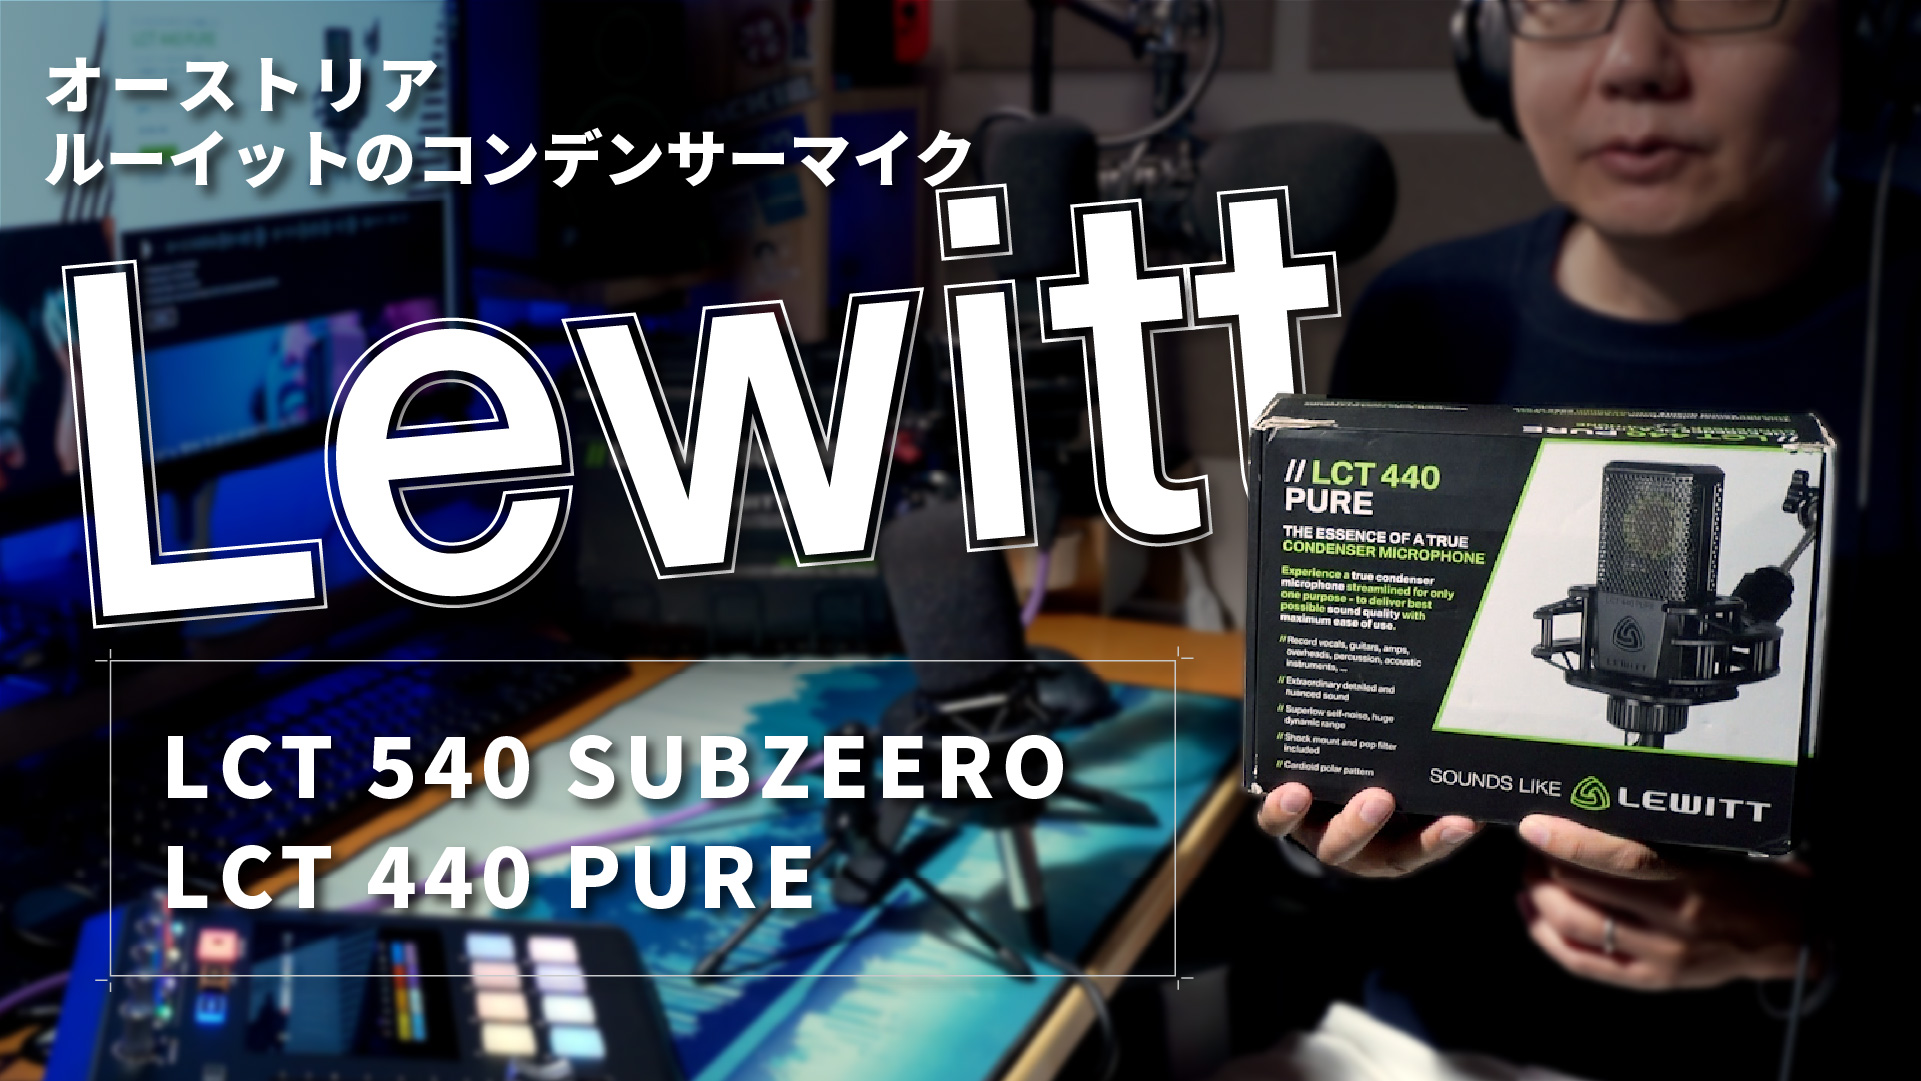 Lewitt】LCT540 SubZero、LCT440 Pure 比較検証【ポッドキャスト、音声